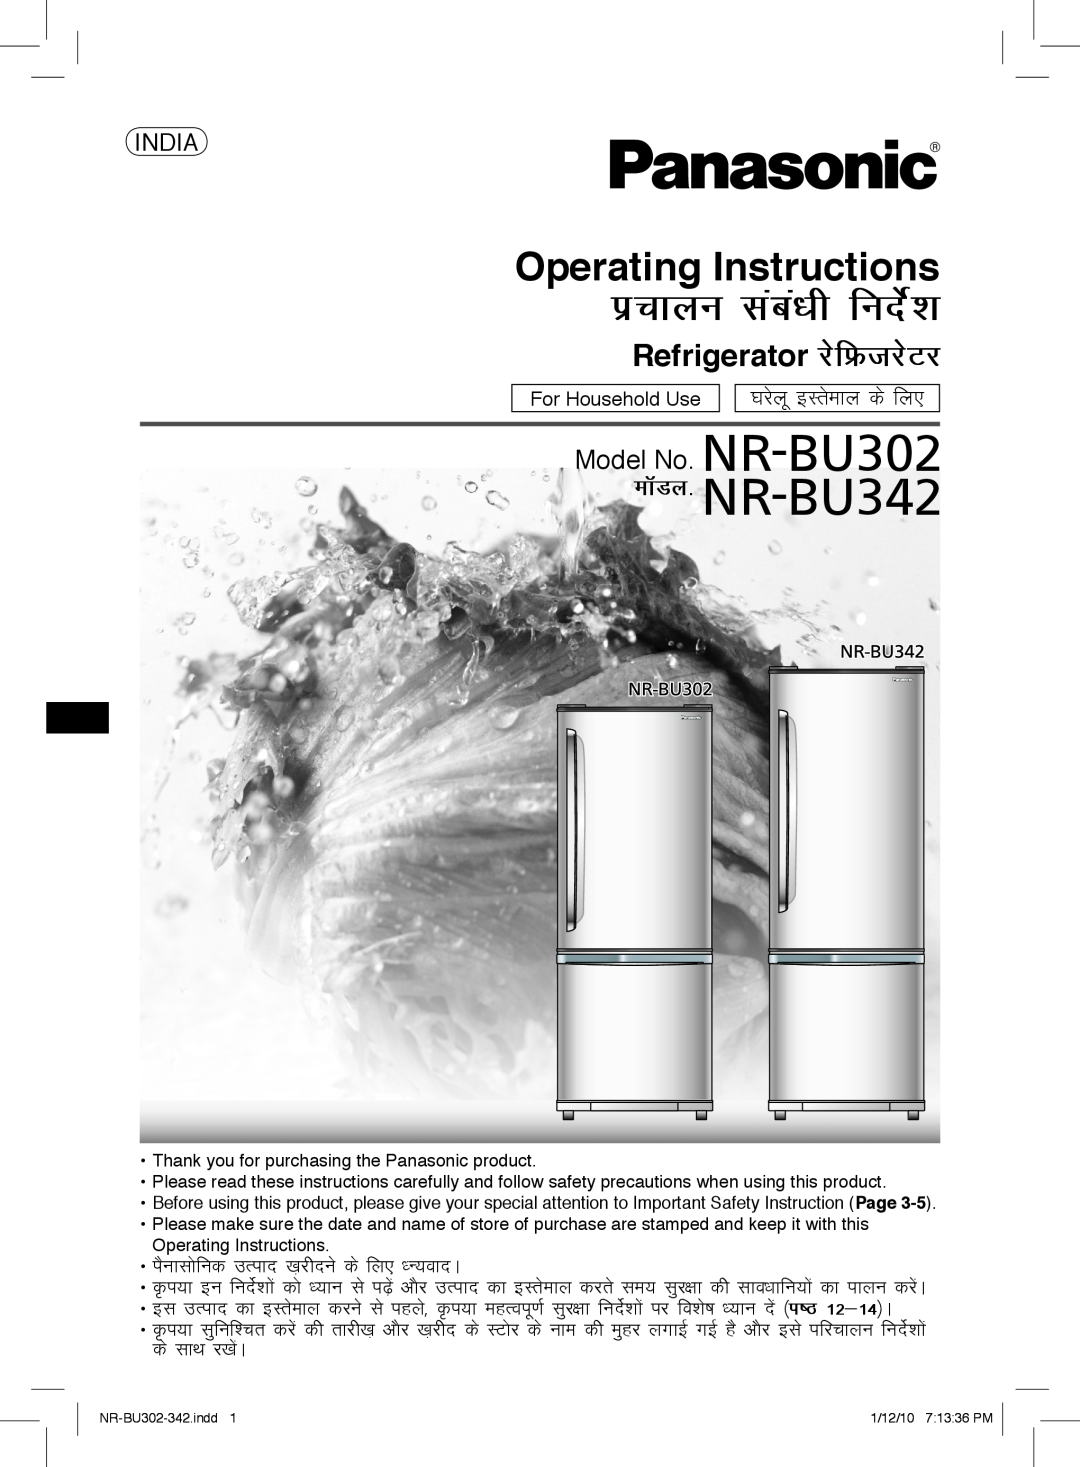 Panasonic manual izpkyu laca/kh funsZ’k, Refrigerator jsfÝtjsVj, ekWMy. NR-BU342, Operating Instructions, India 